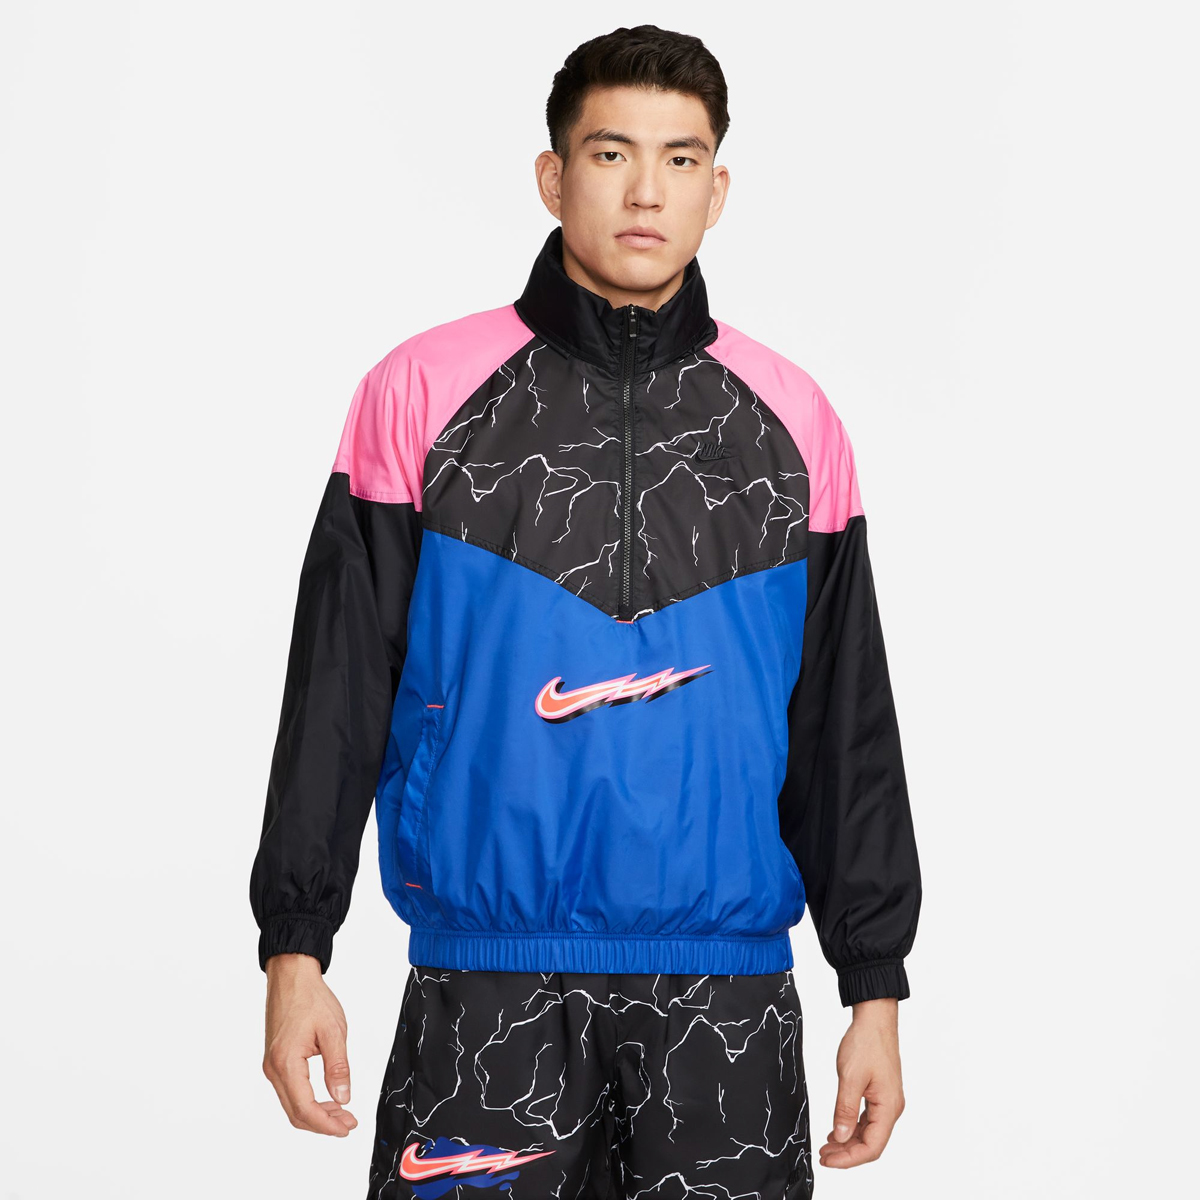 Nike-Electric-High-Jacket-Black-Blue-Pink-1